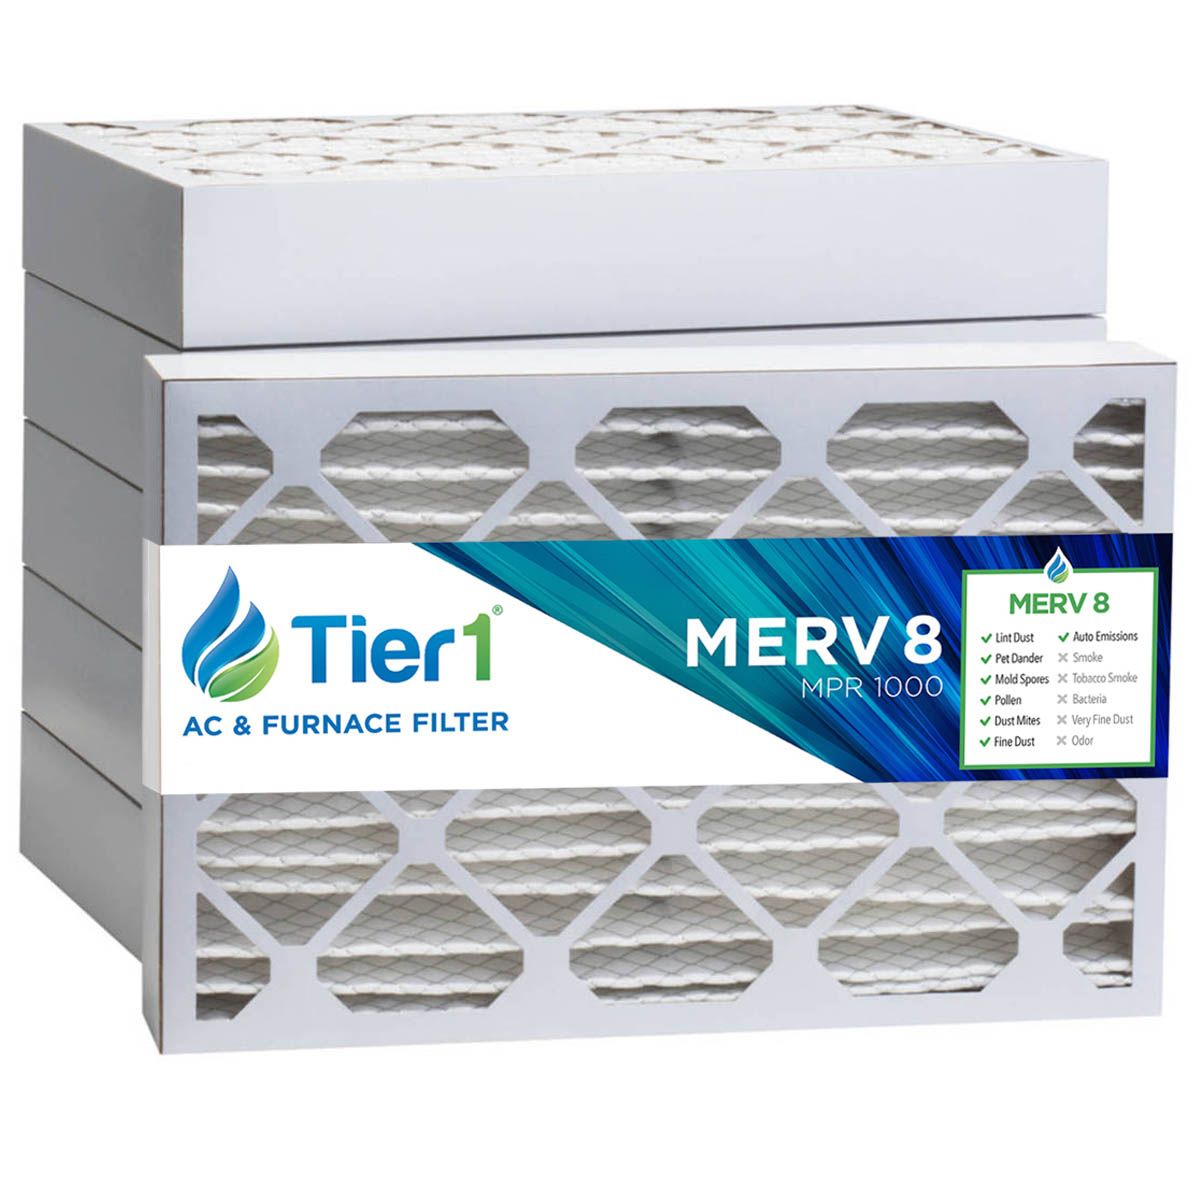 20x25x4 Merv 8 Universal Air Filter By Tier1